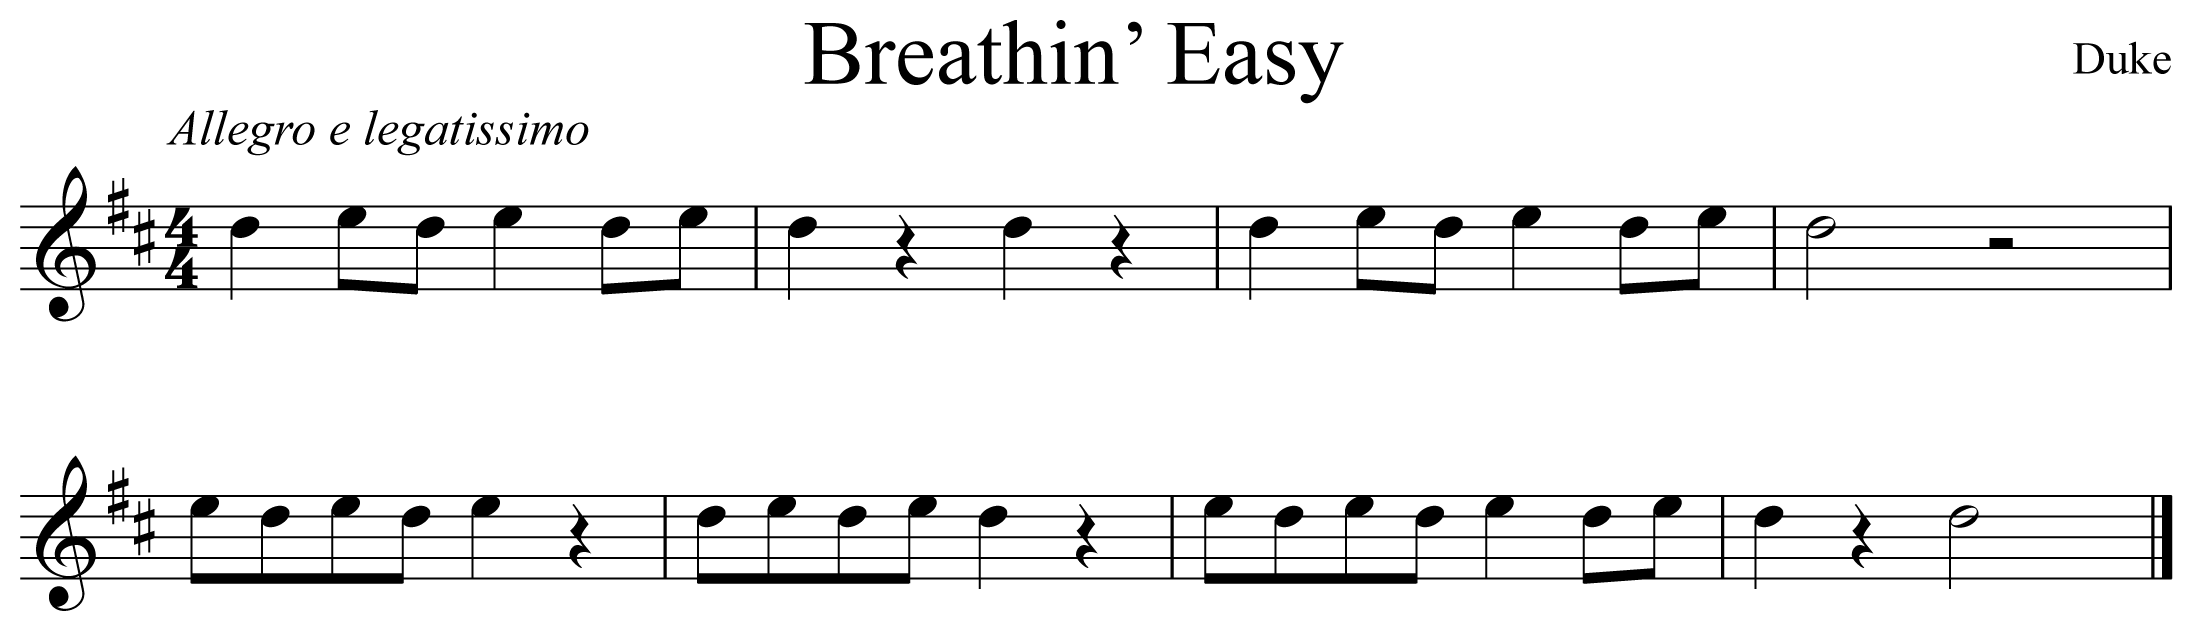 Breathin' Easy Saxophone Music Notation